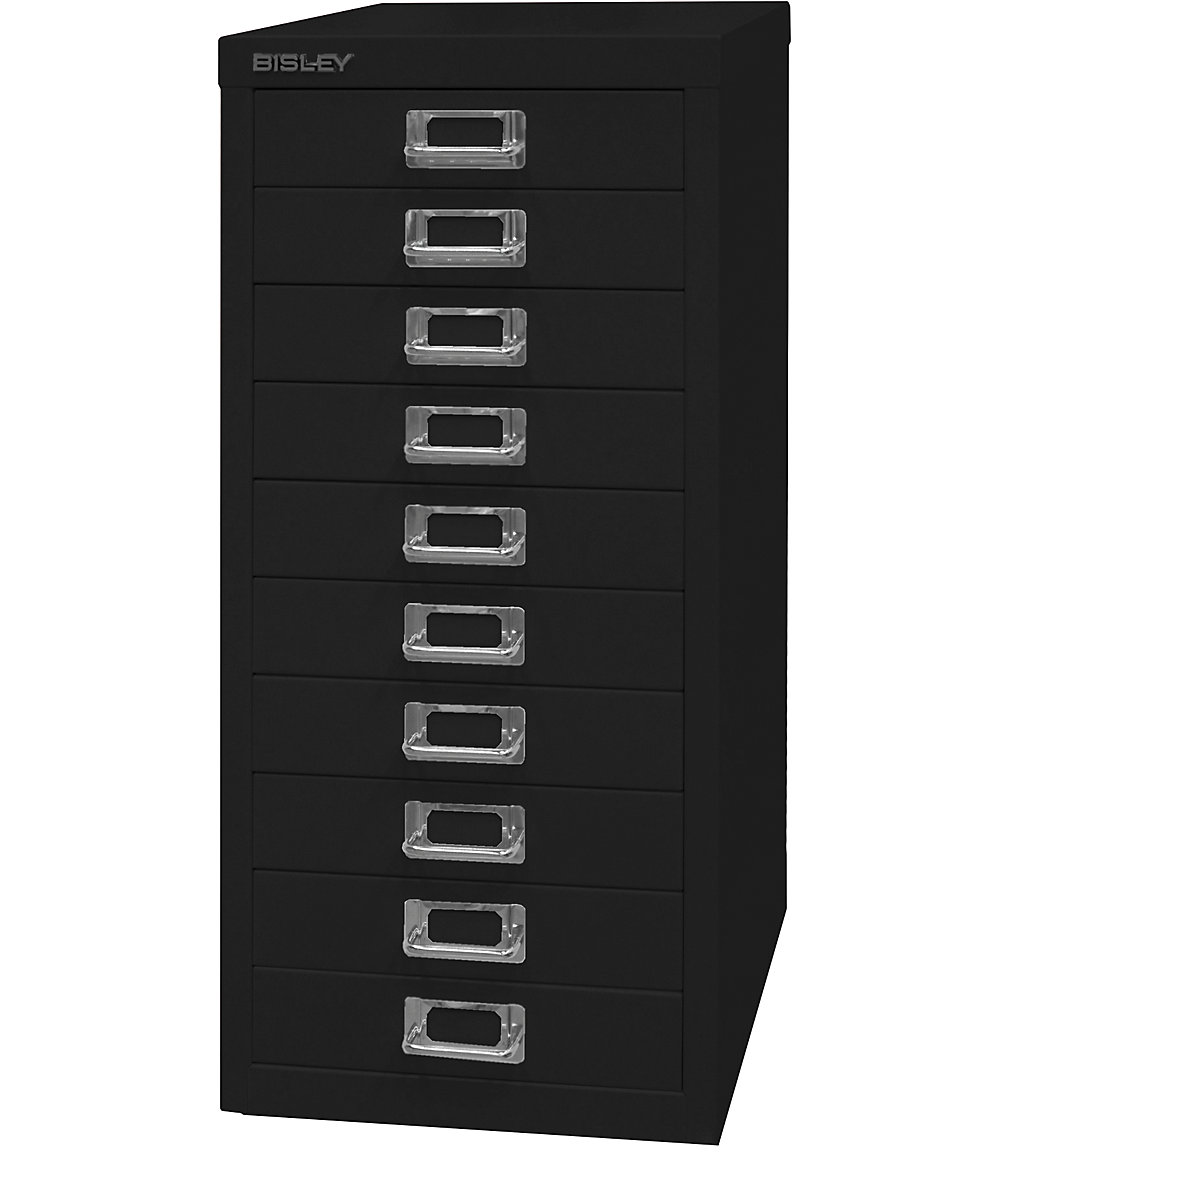 MultiDrawer™ 29 series – BISLEY, A4, 10 drawers, black-11